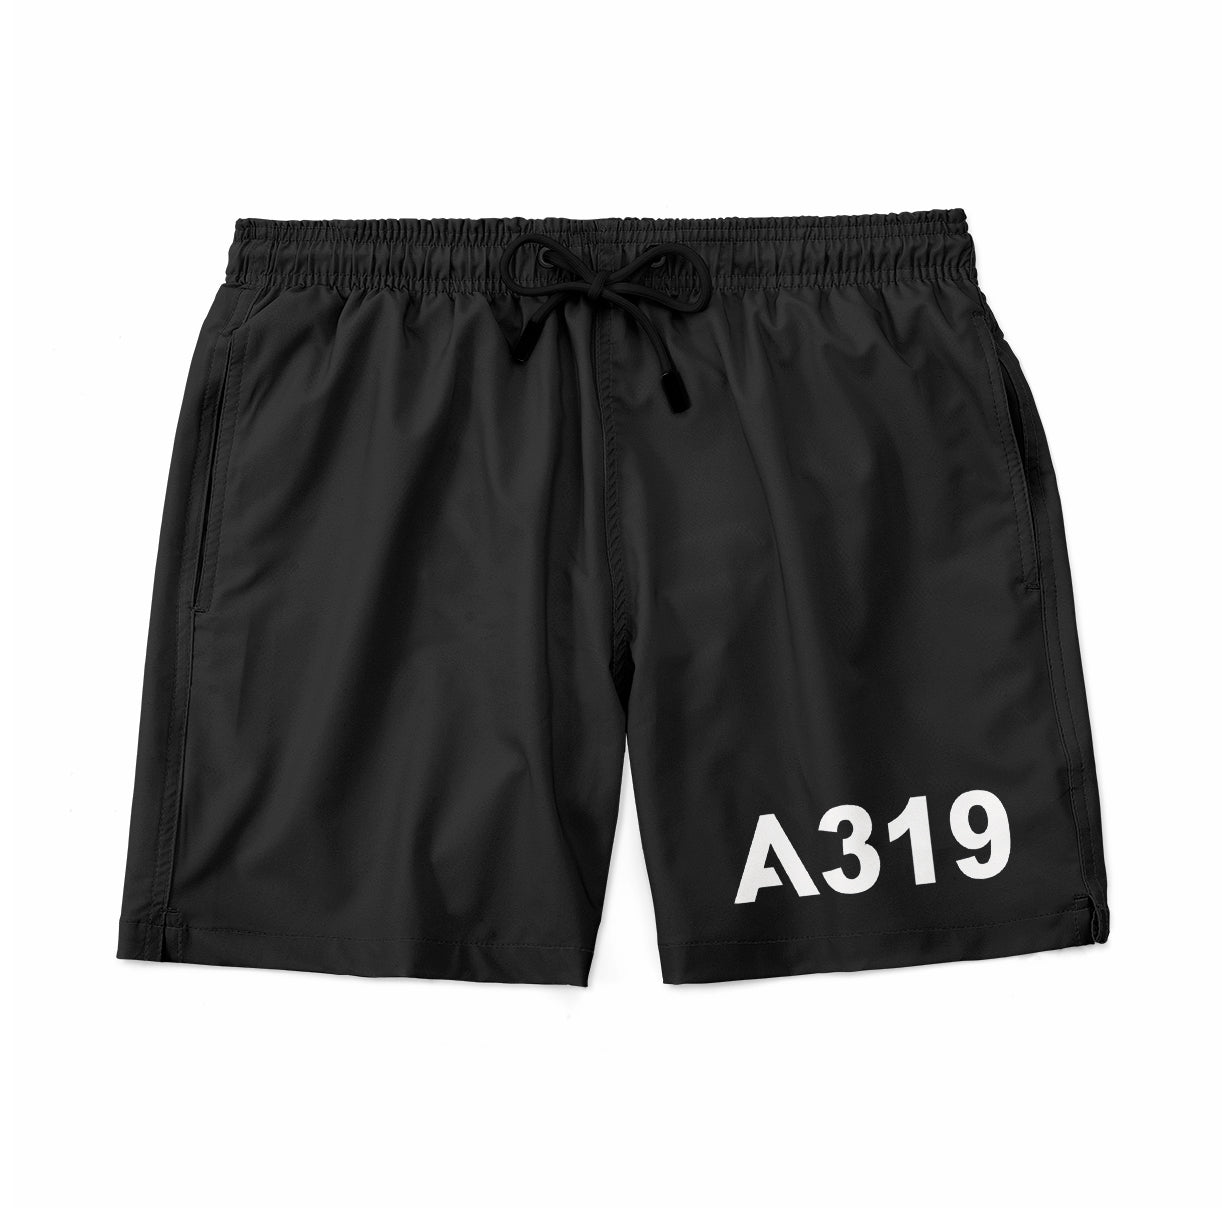 A319 Flat Text Designed Swim Trunks & Shorts